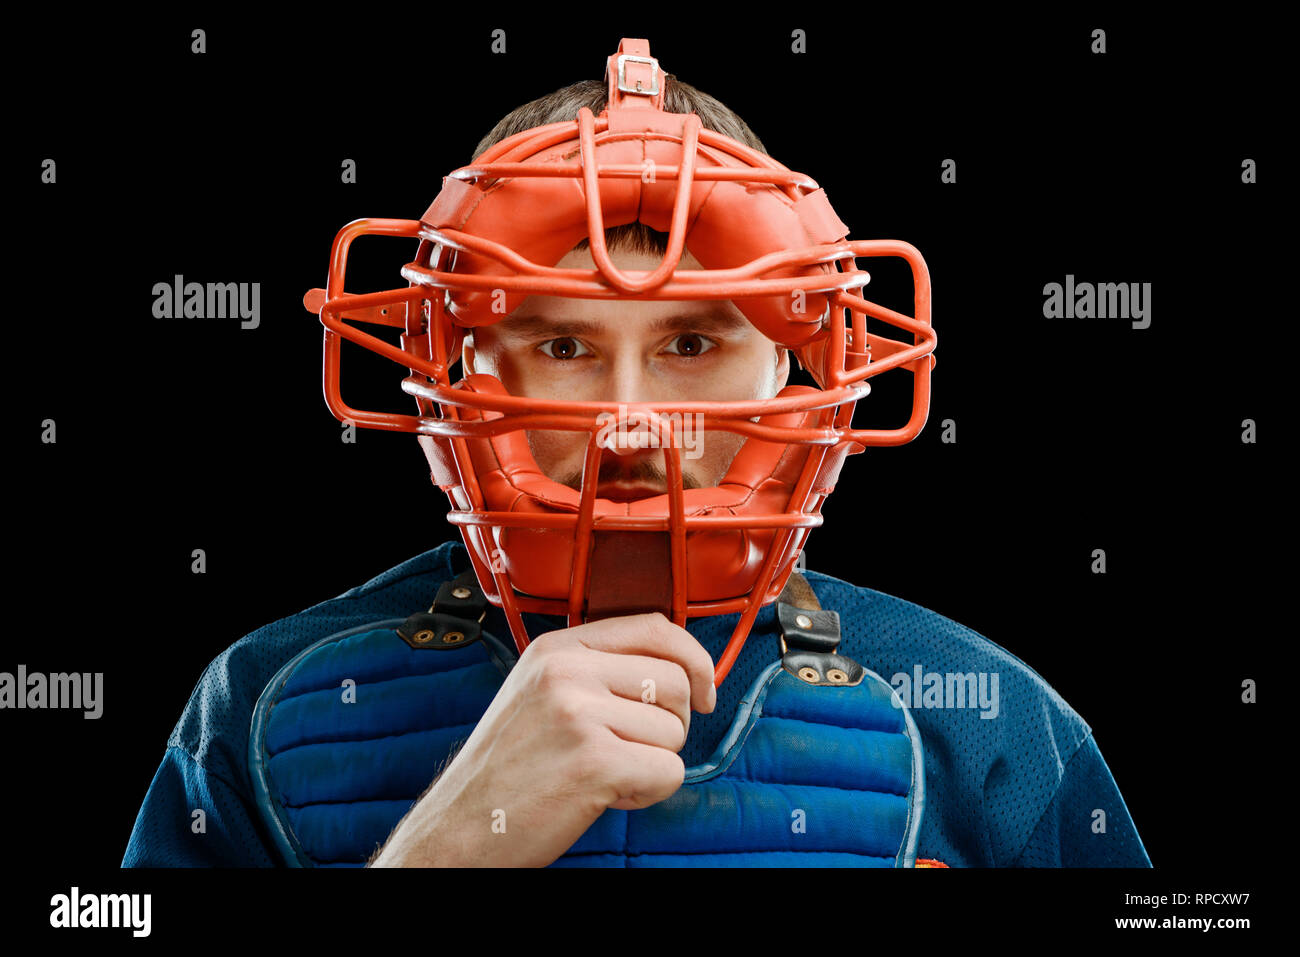 catchers mask stock photos - OFFSET